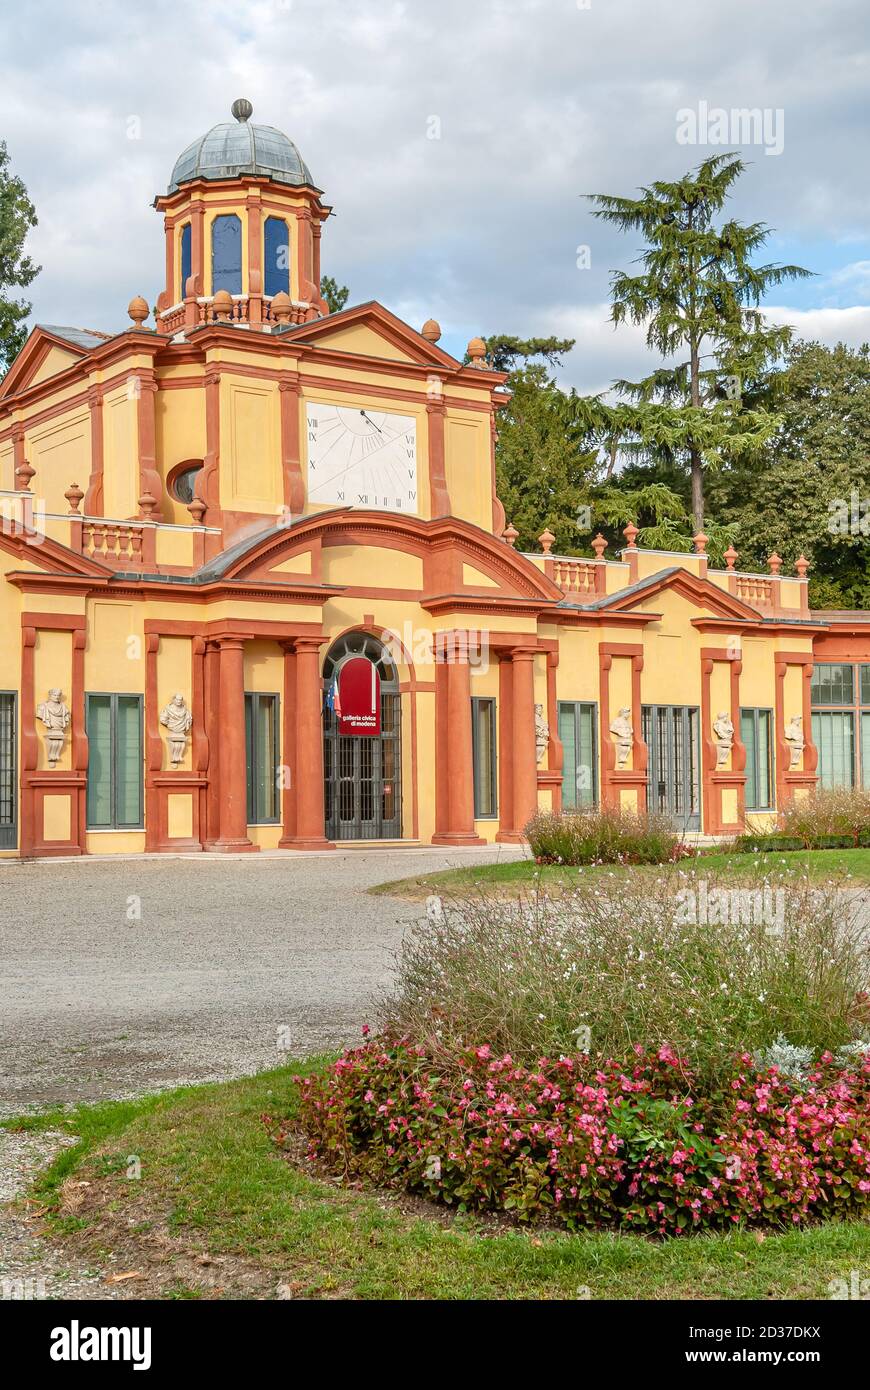 Palazzina dei Giardini pubblici im historischen Stadtzentrum von Modena, Emilia Romagna, Norditalien. Stockfoto